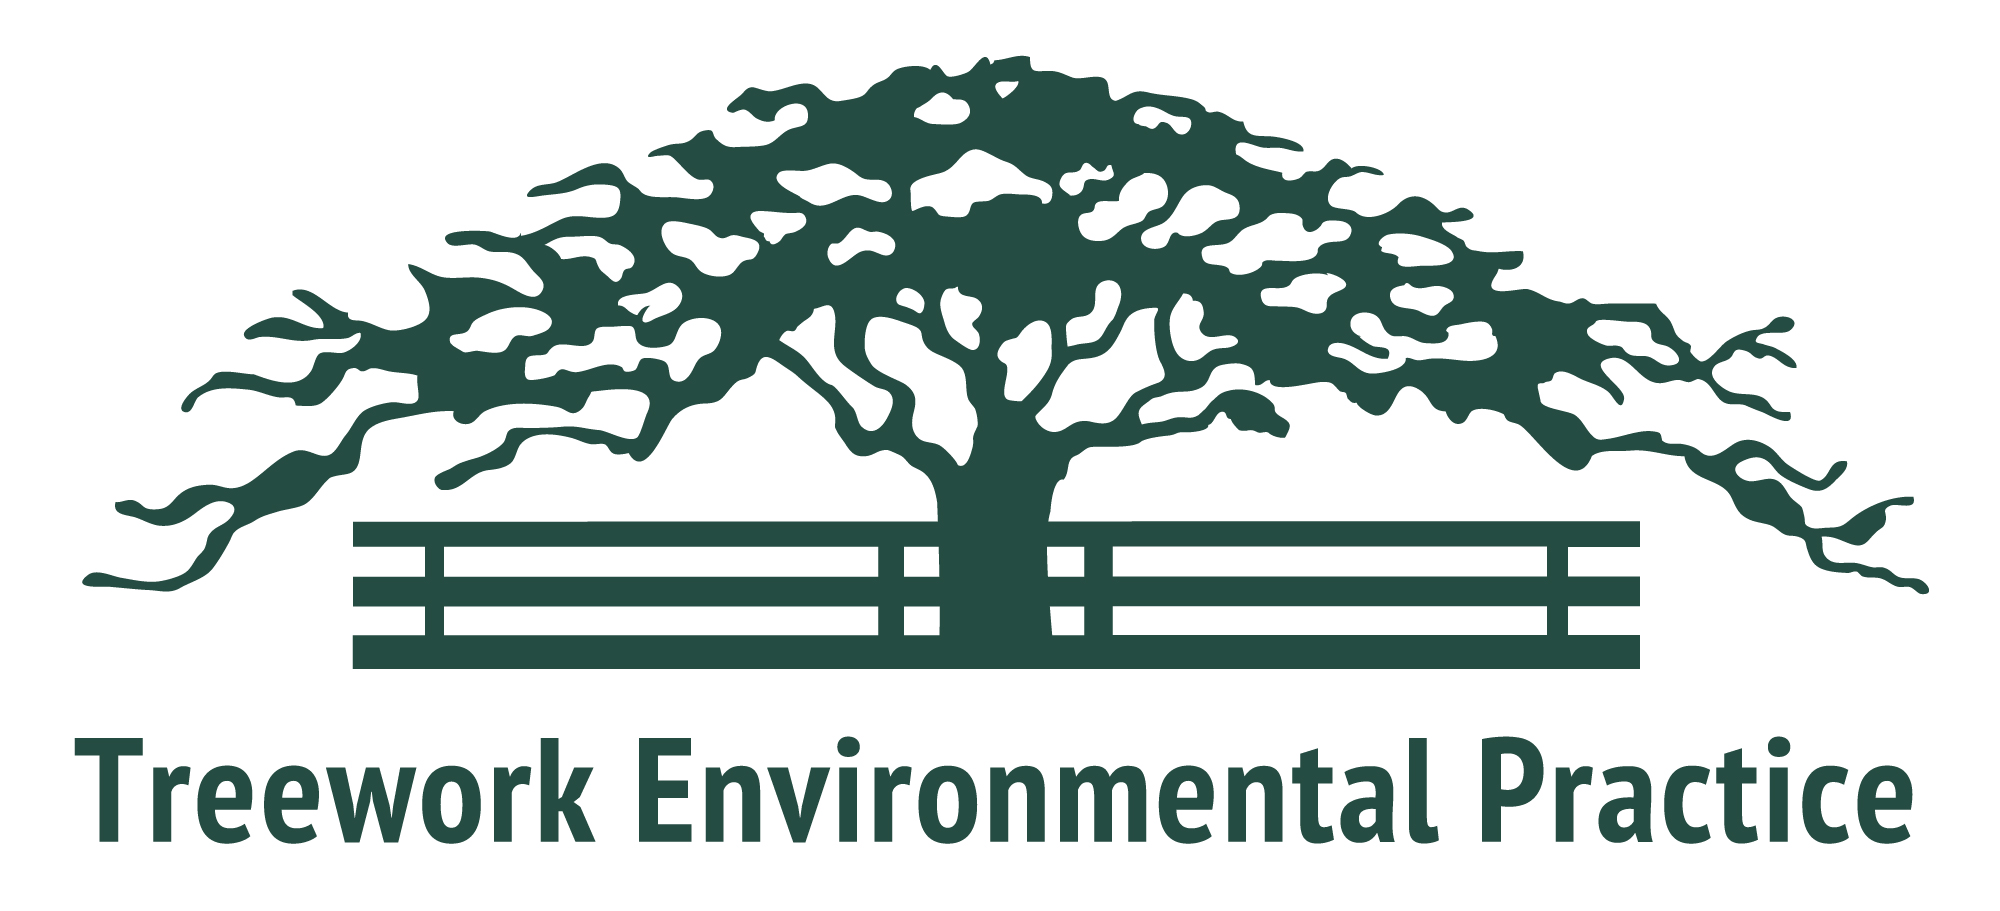 Treework Environmental Practice